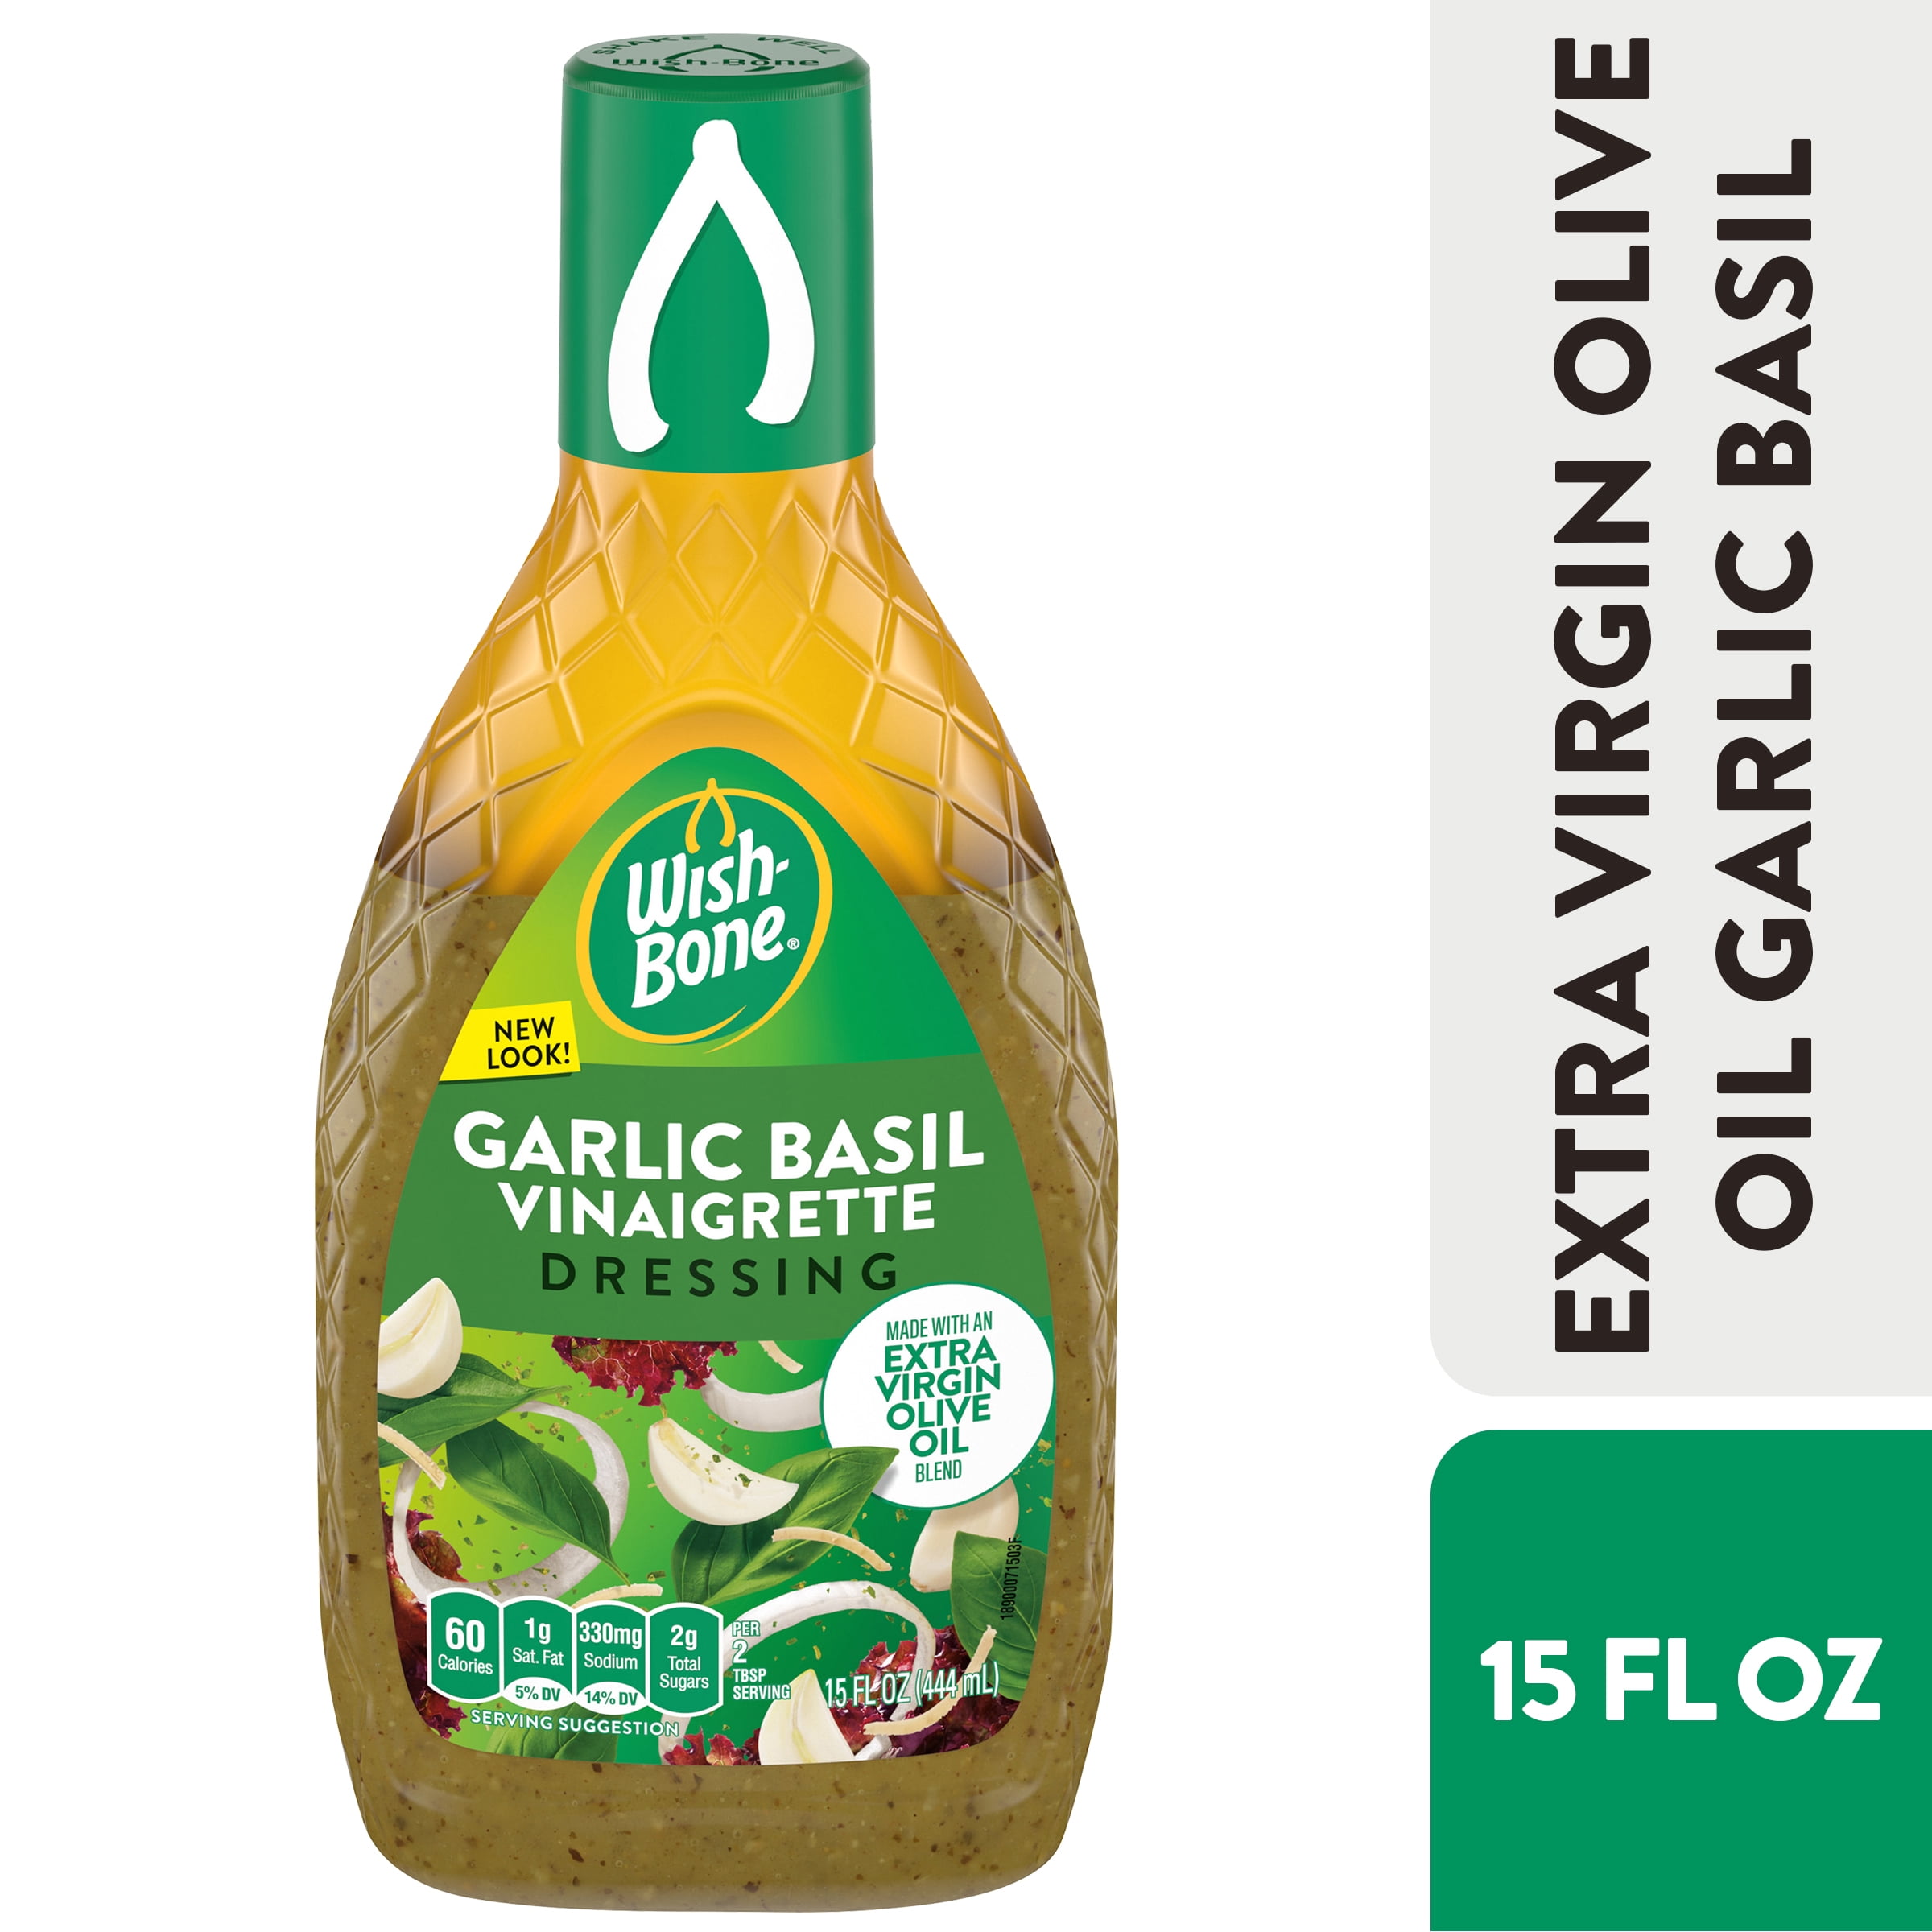 Wish-Bone Extra Virgin Olive Oil Blend Garlic Basil Italian Dressing, 15 FL OZ